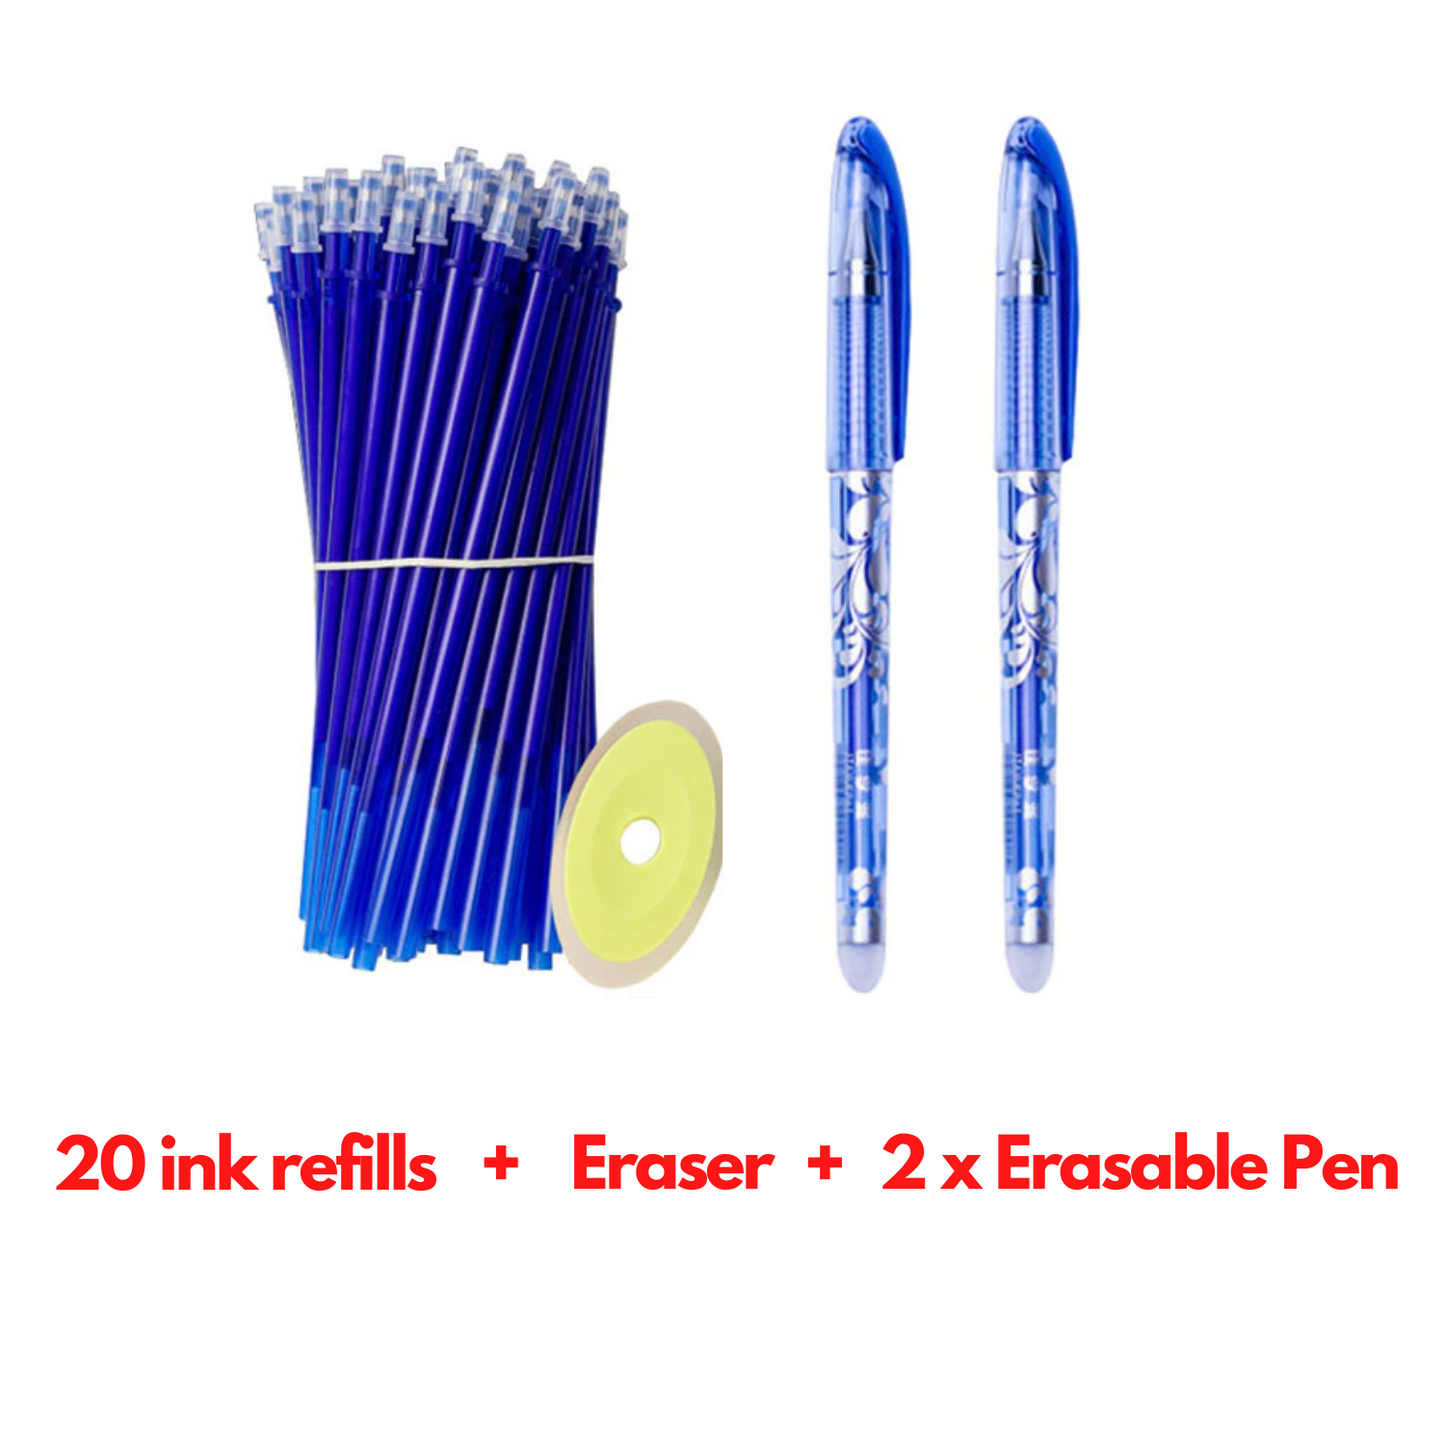 2x Erasable Pen + Eraser + 20 Ink Refills